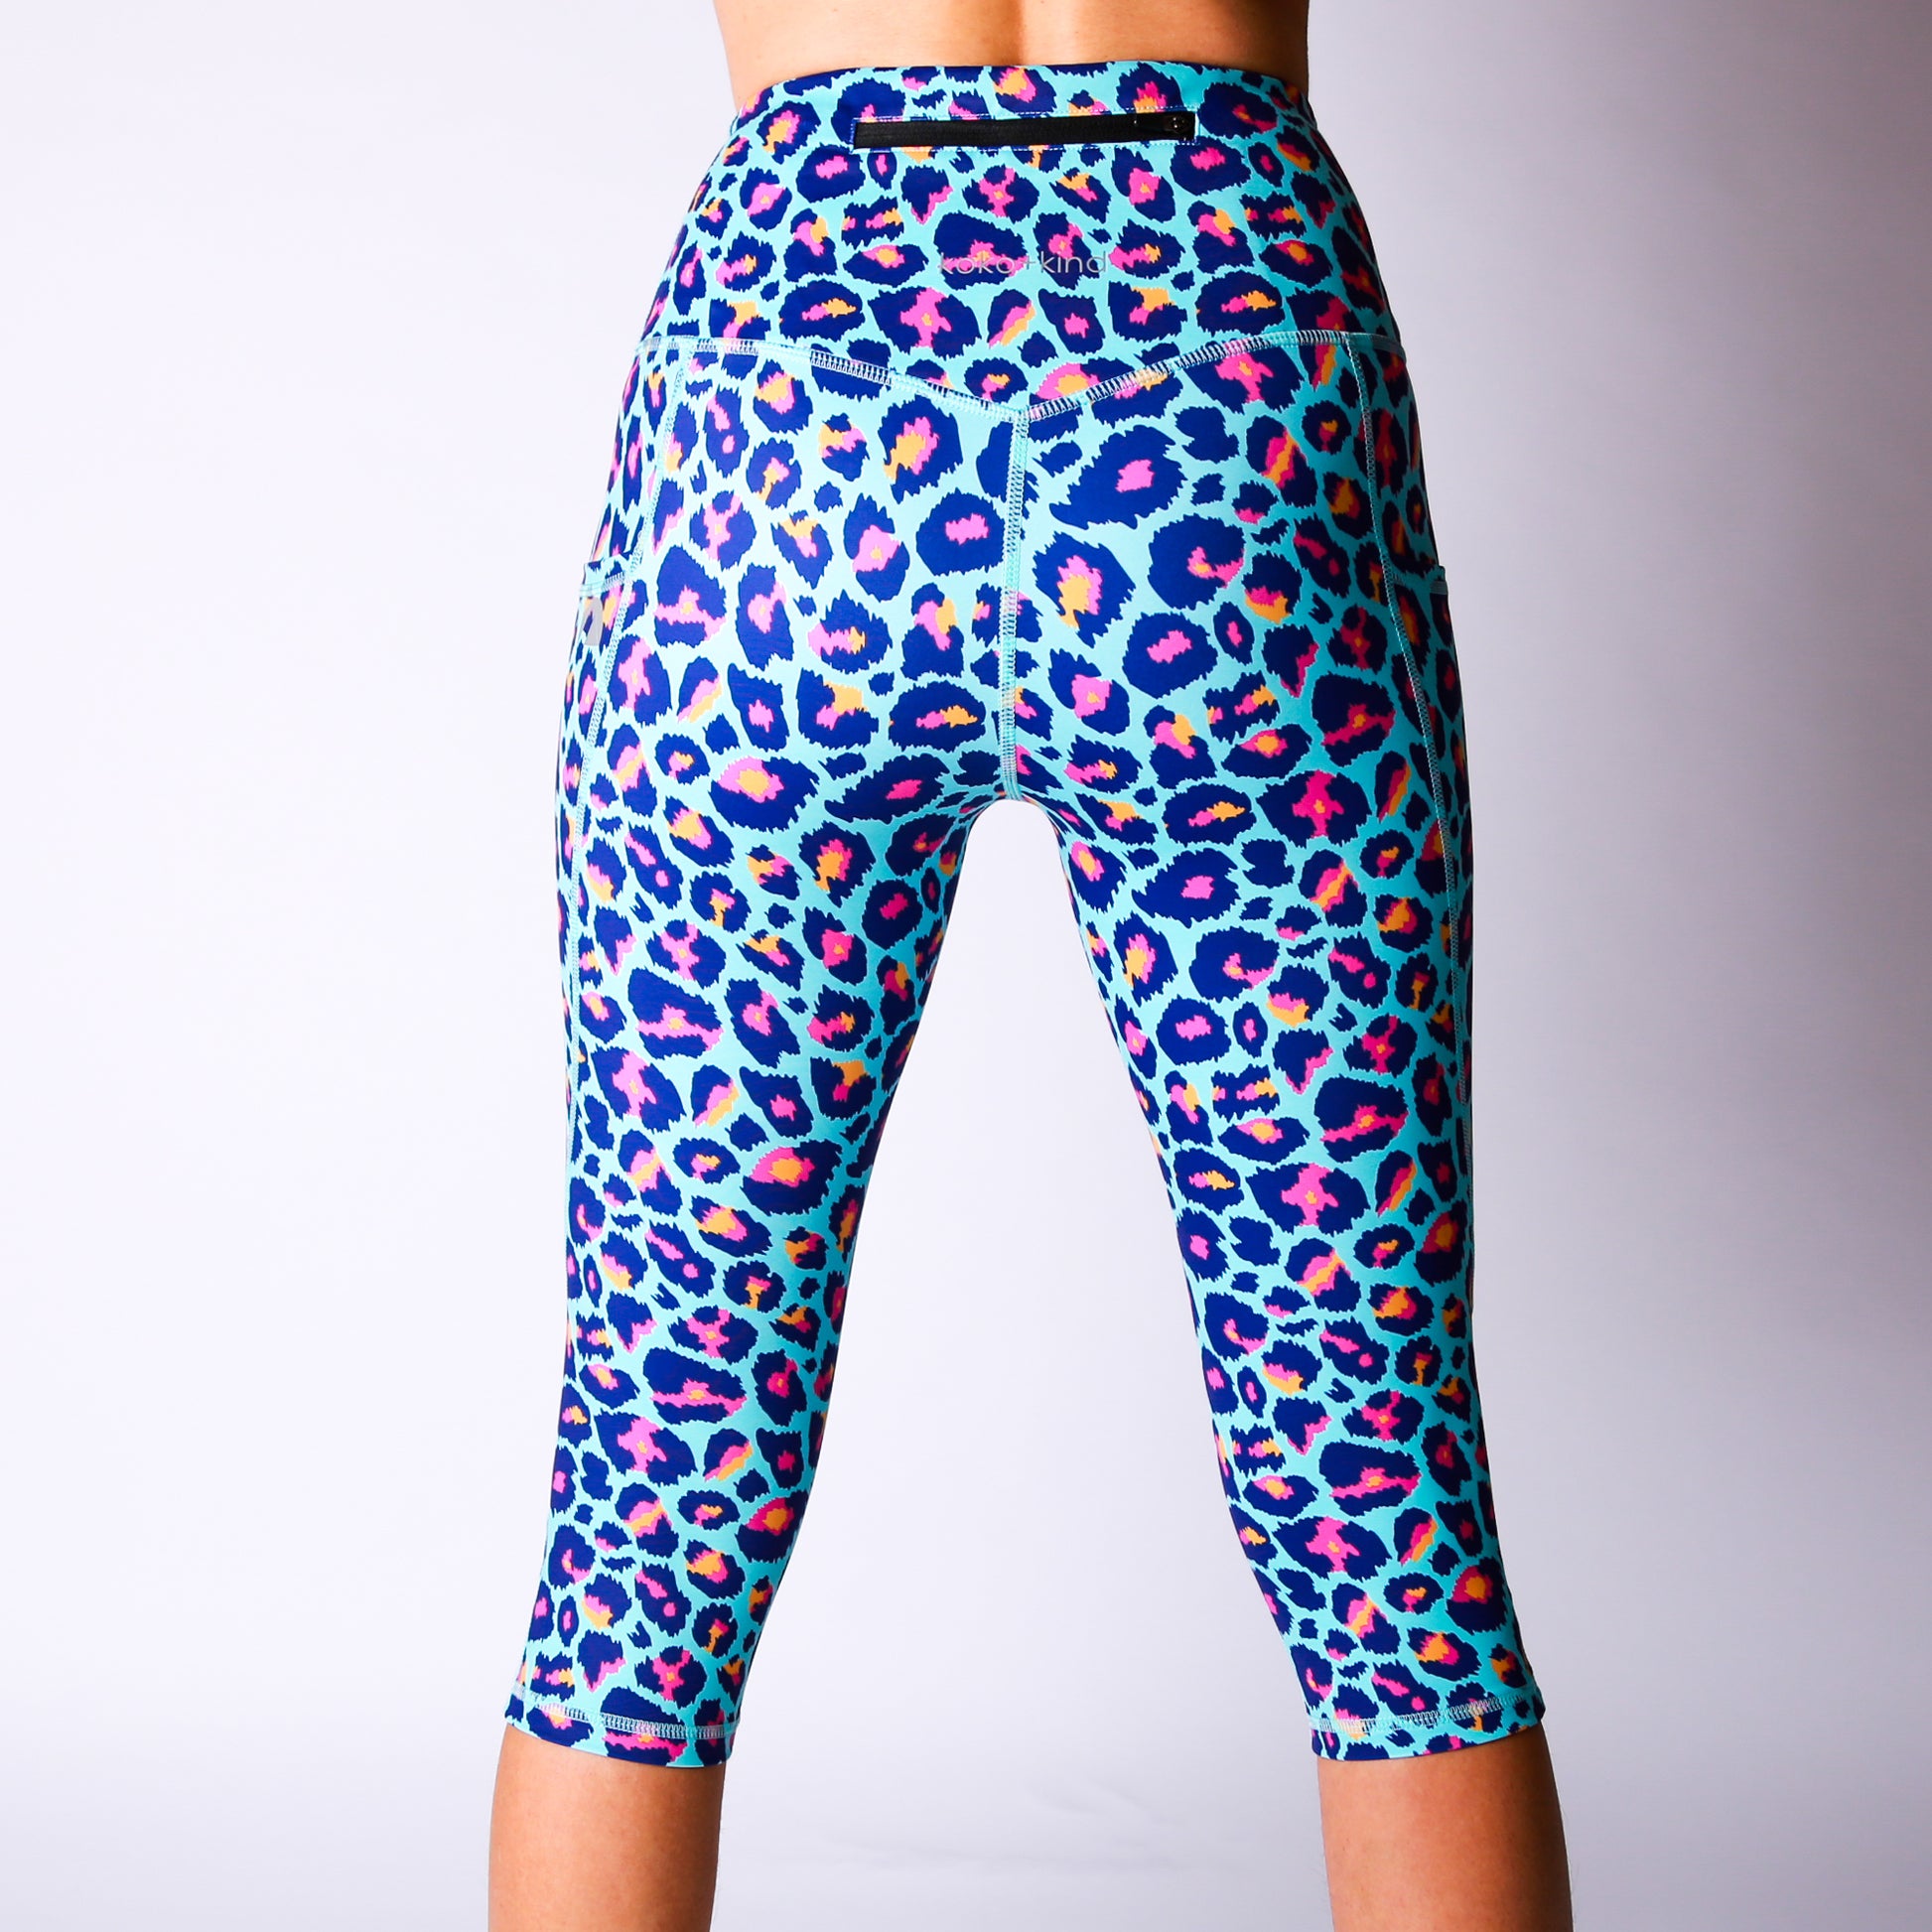 Blue Leopard Print Activewear